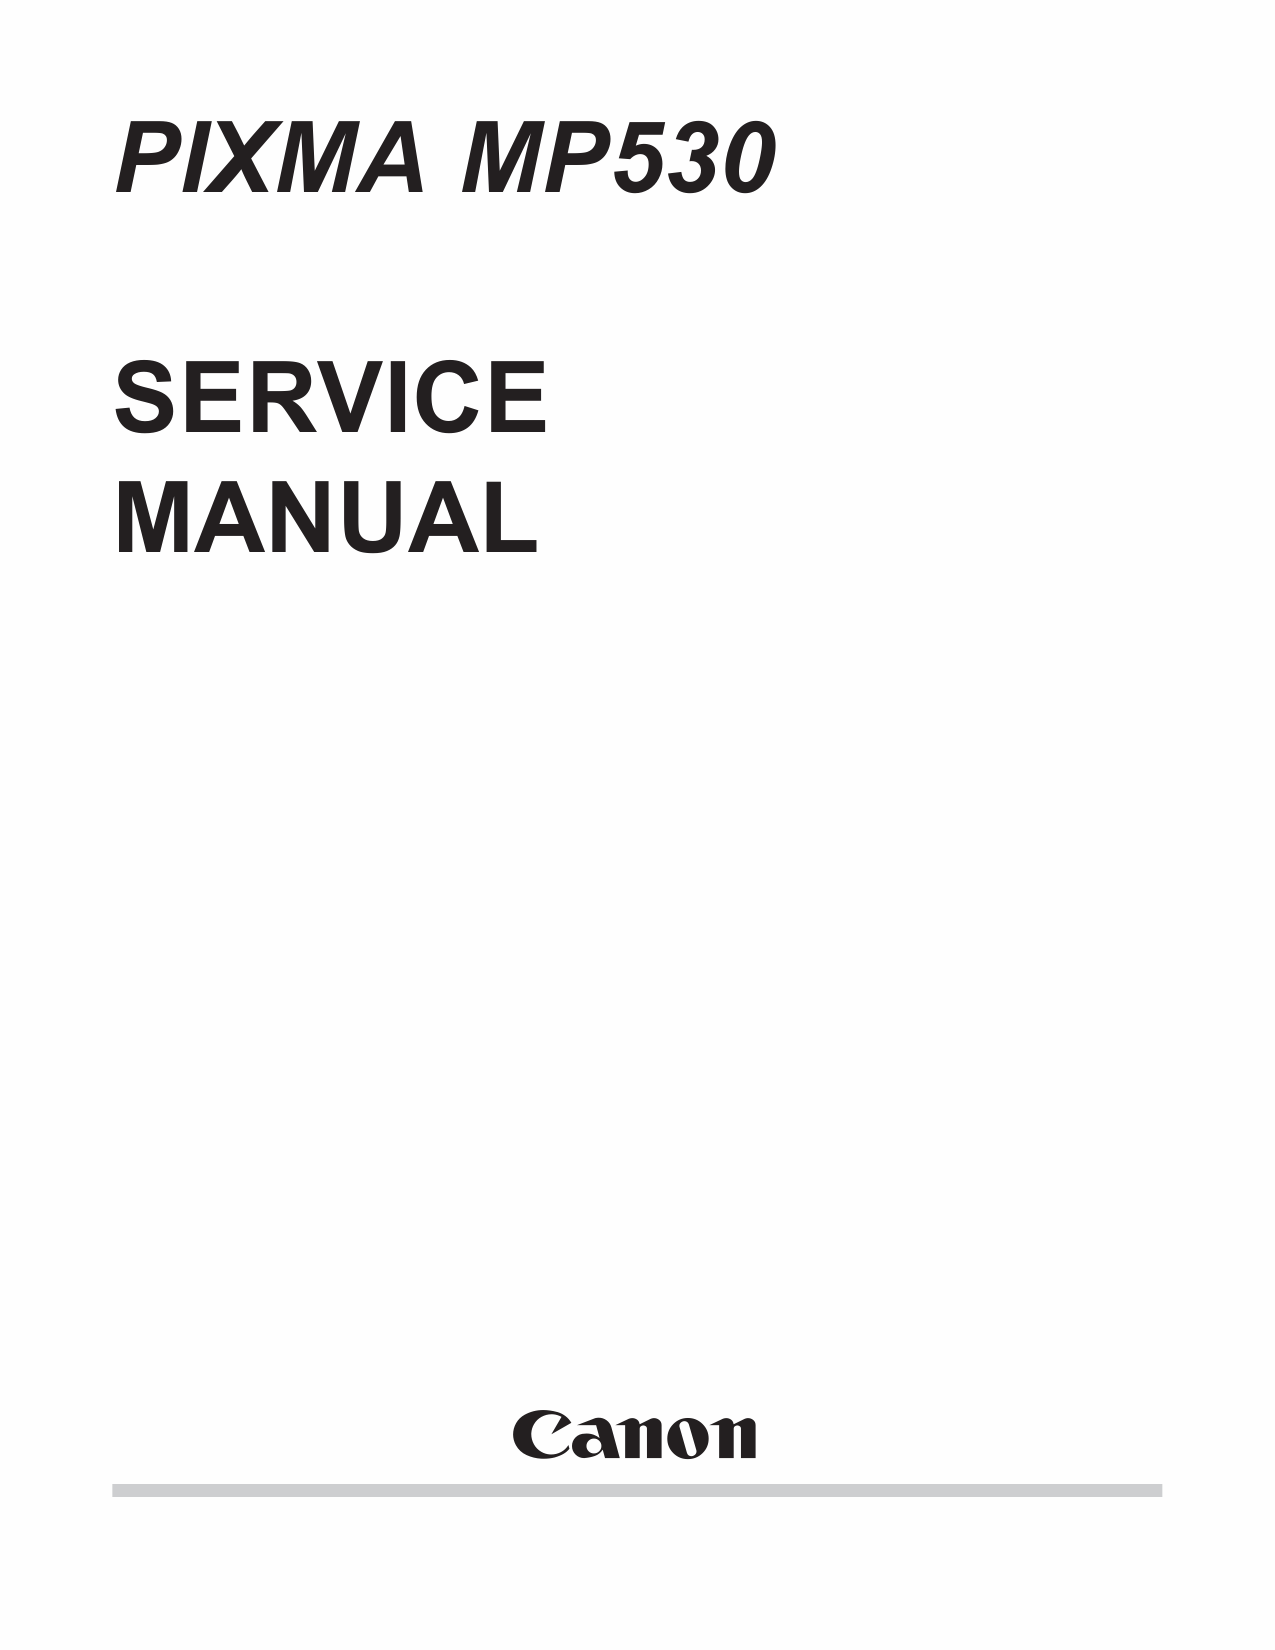 Canon PIXMA MP530 Parts and Service Manual-1